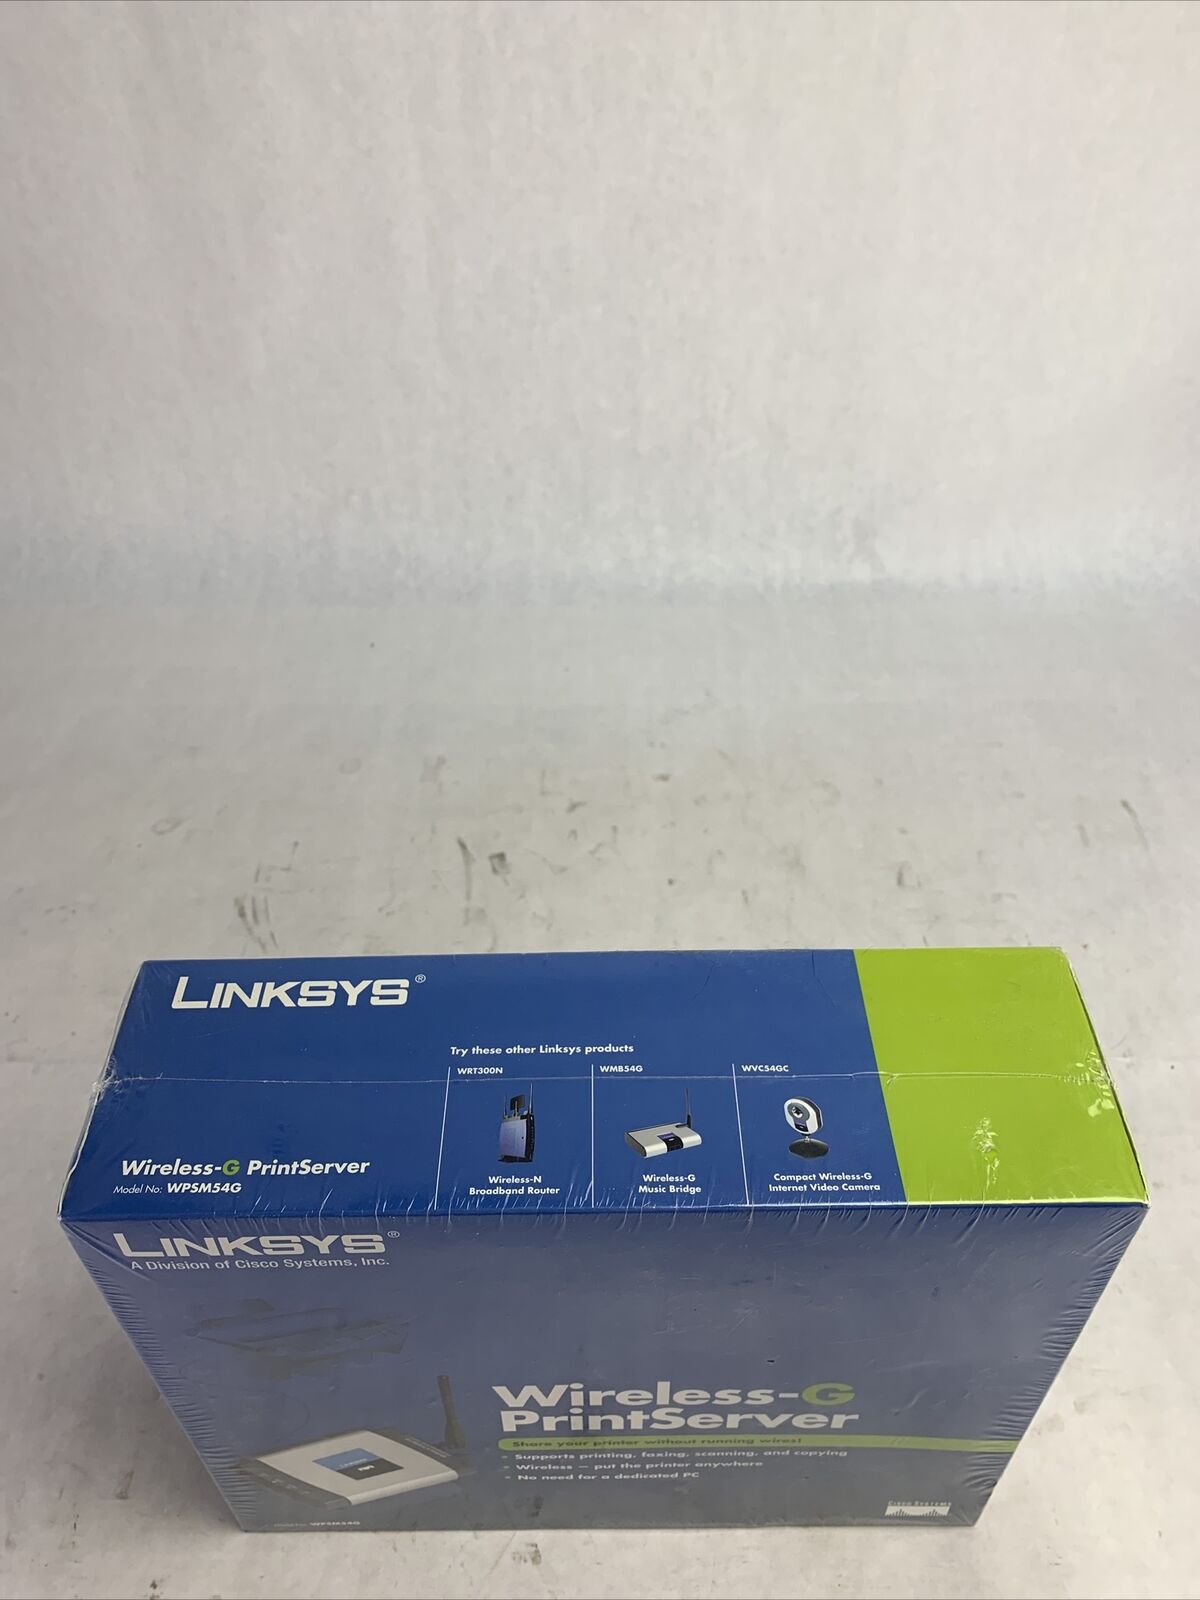 Linksys Wireless-G PrintServer New In Box WPSM54G